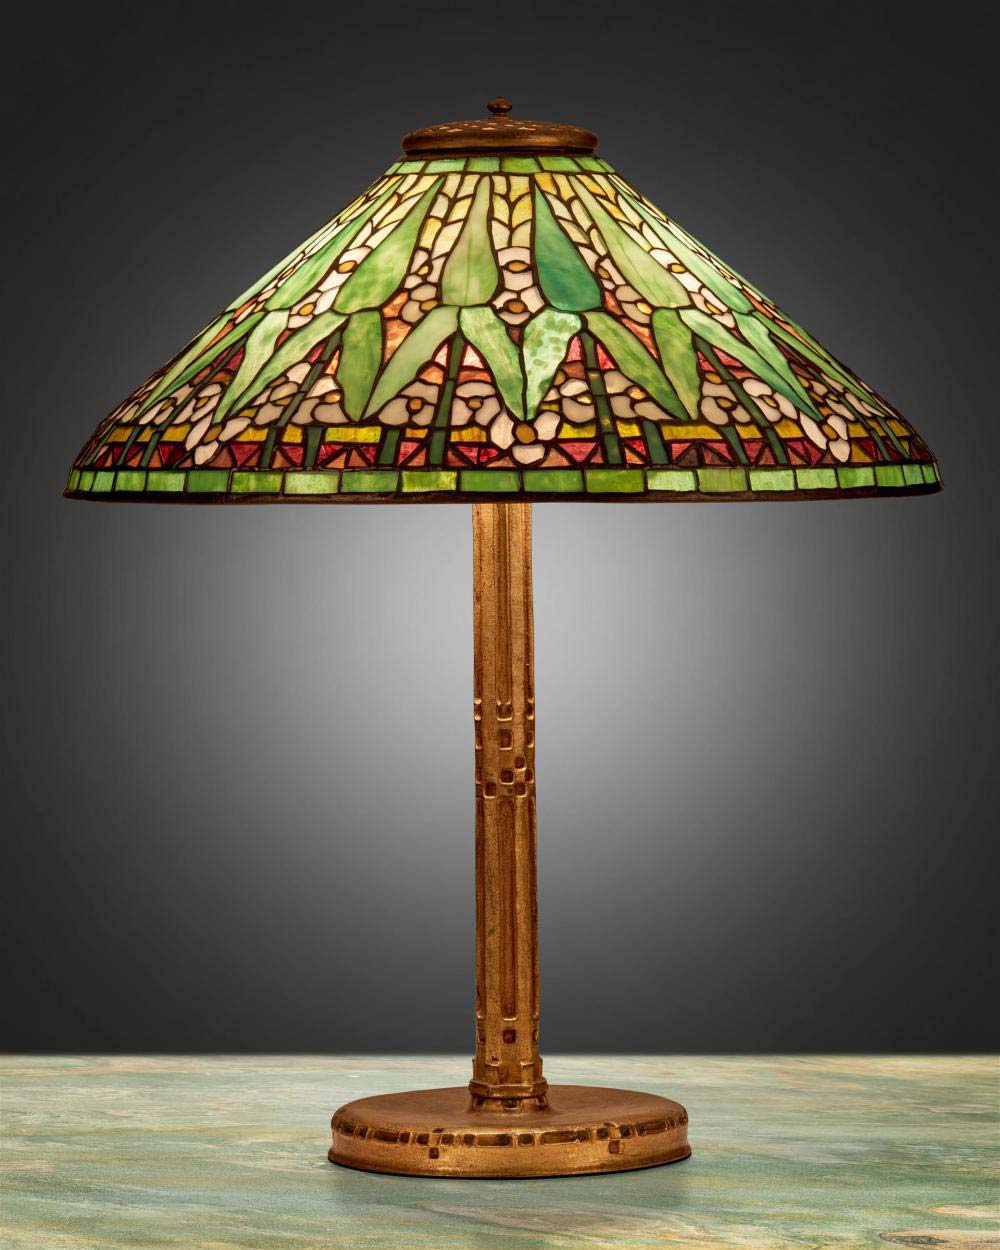 Tiffany Studios “Arrowroot” table lamp, $32,500. Image courtesy John Moran Auctioneers